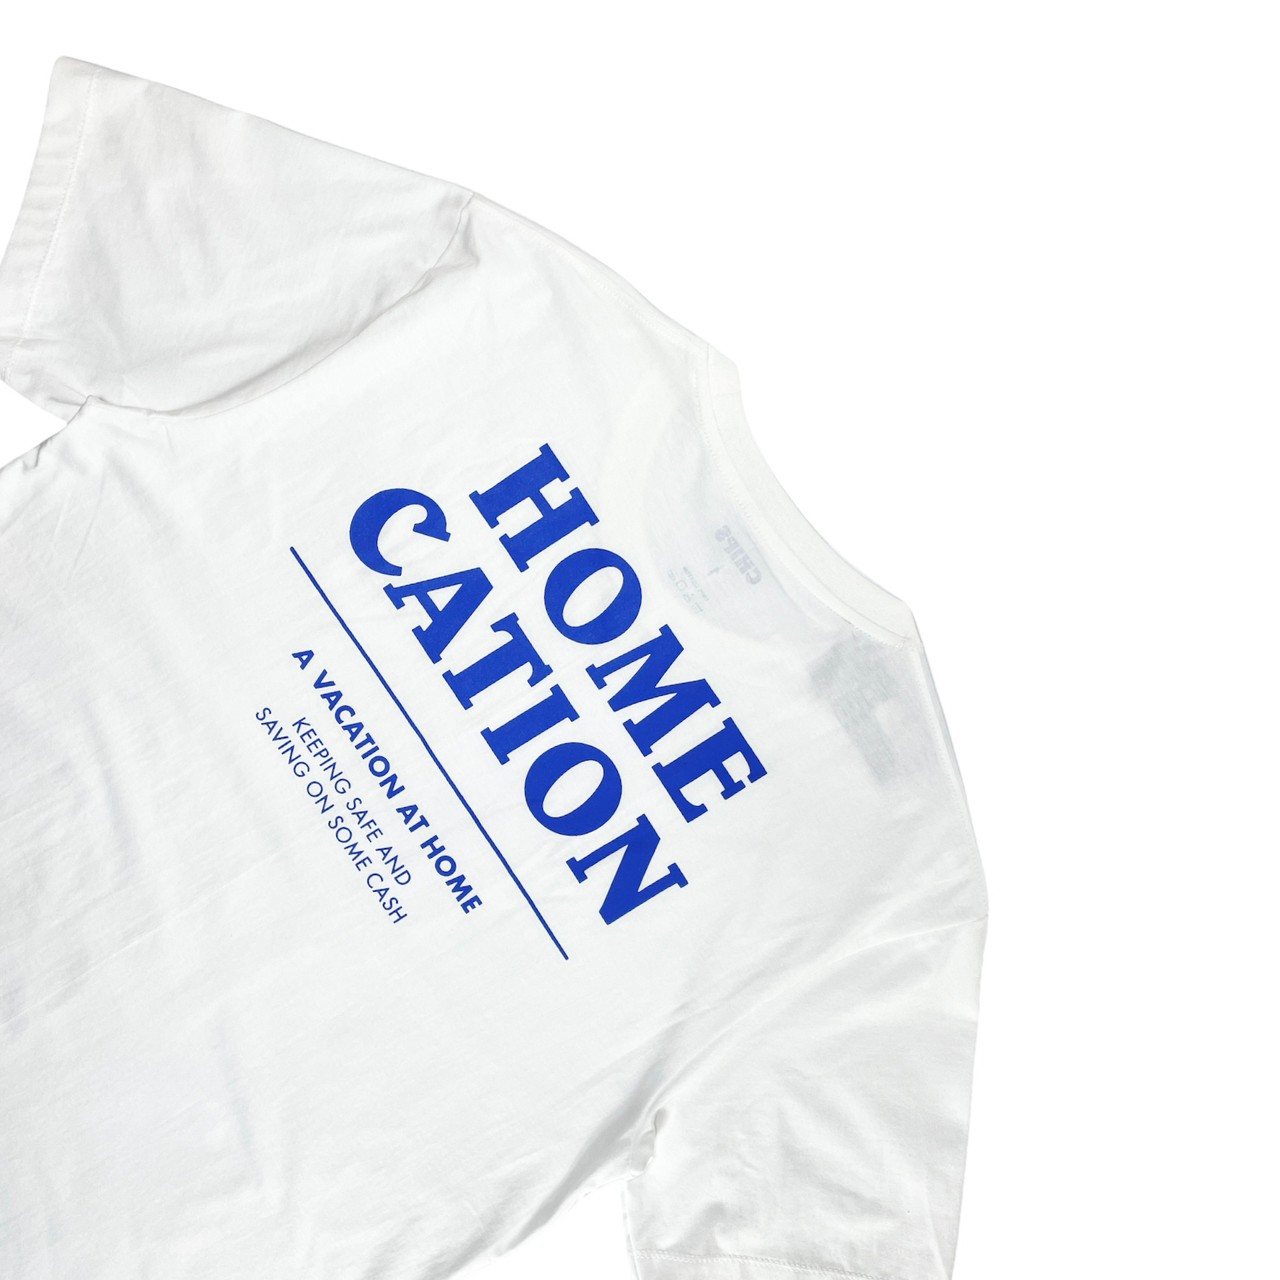 Homecation T-shirt (White-Blue)